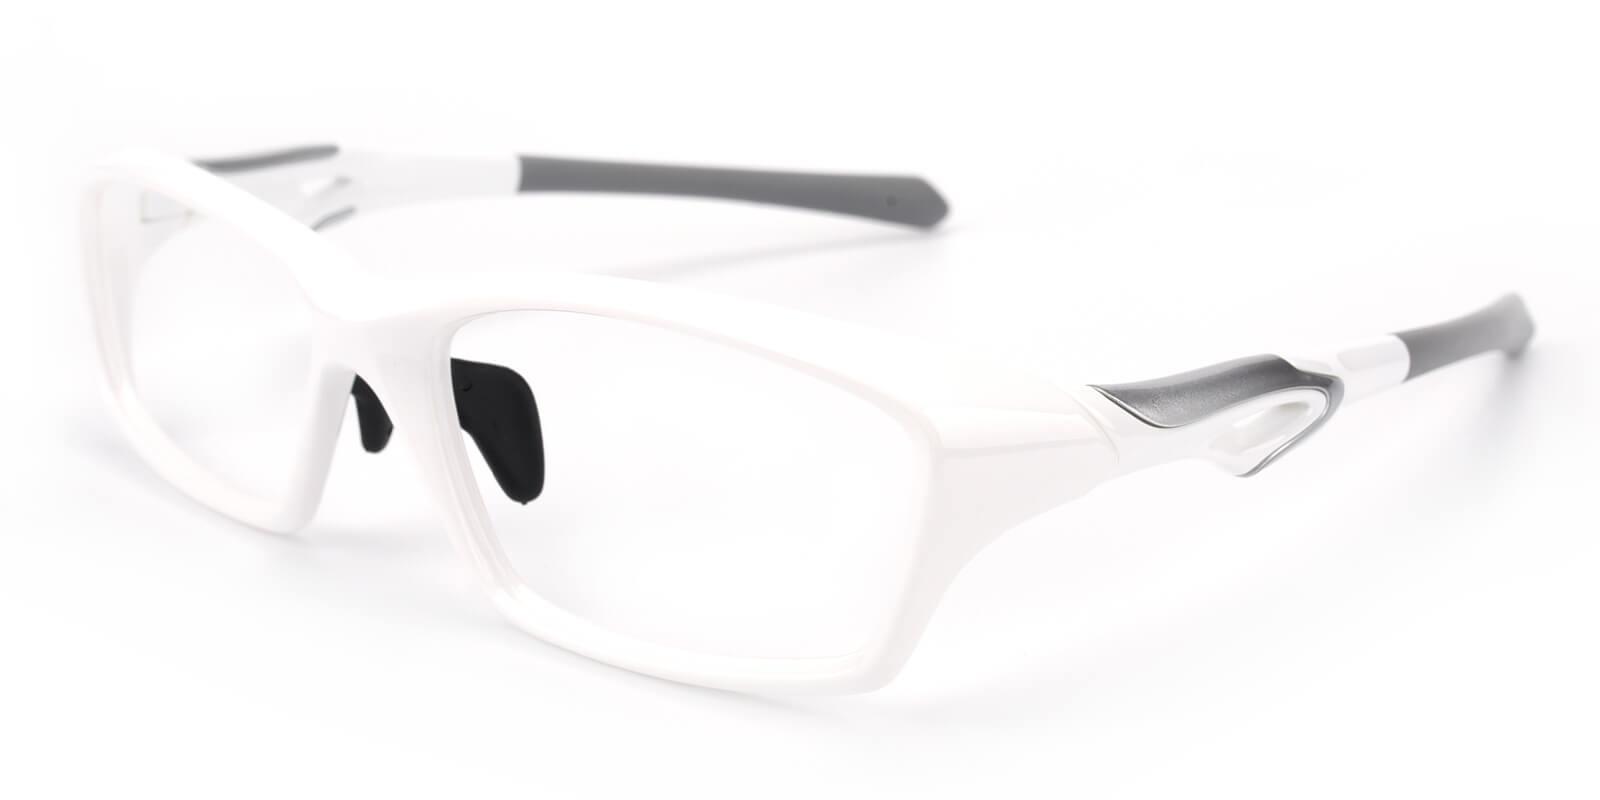 Quazar White TR SportsGlasses , UniversalBridgeFit Frames from ABBE Glasses